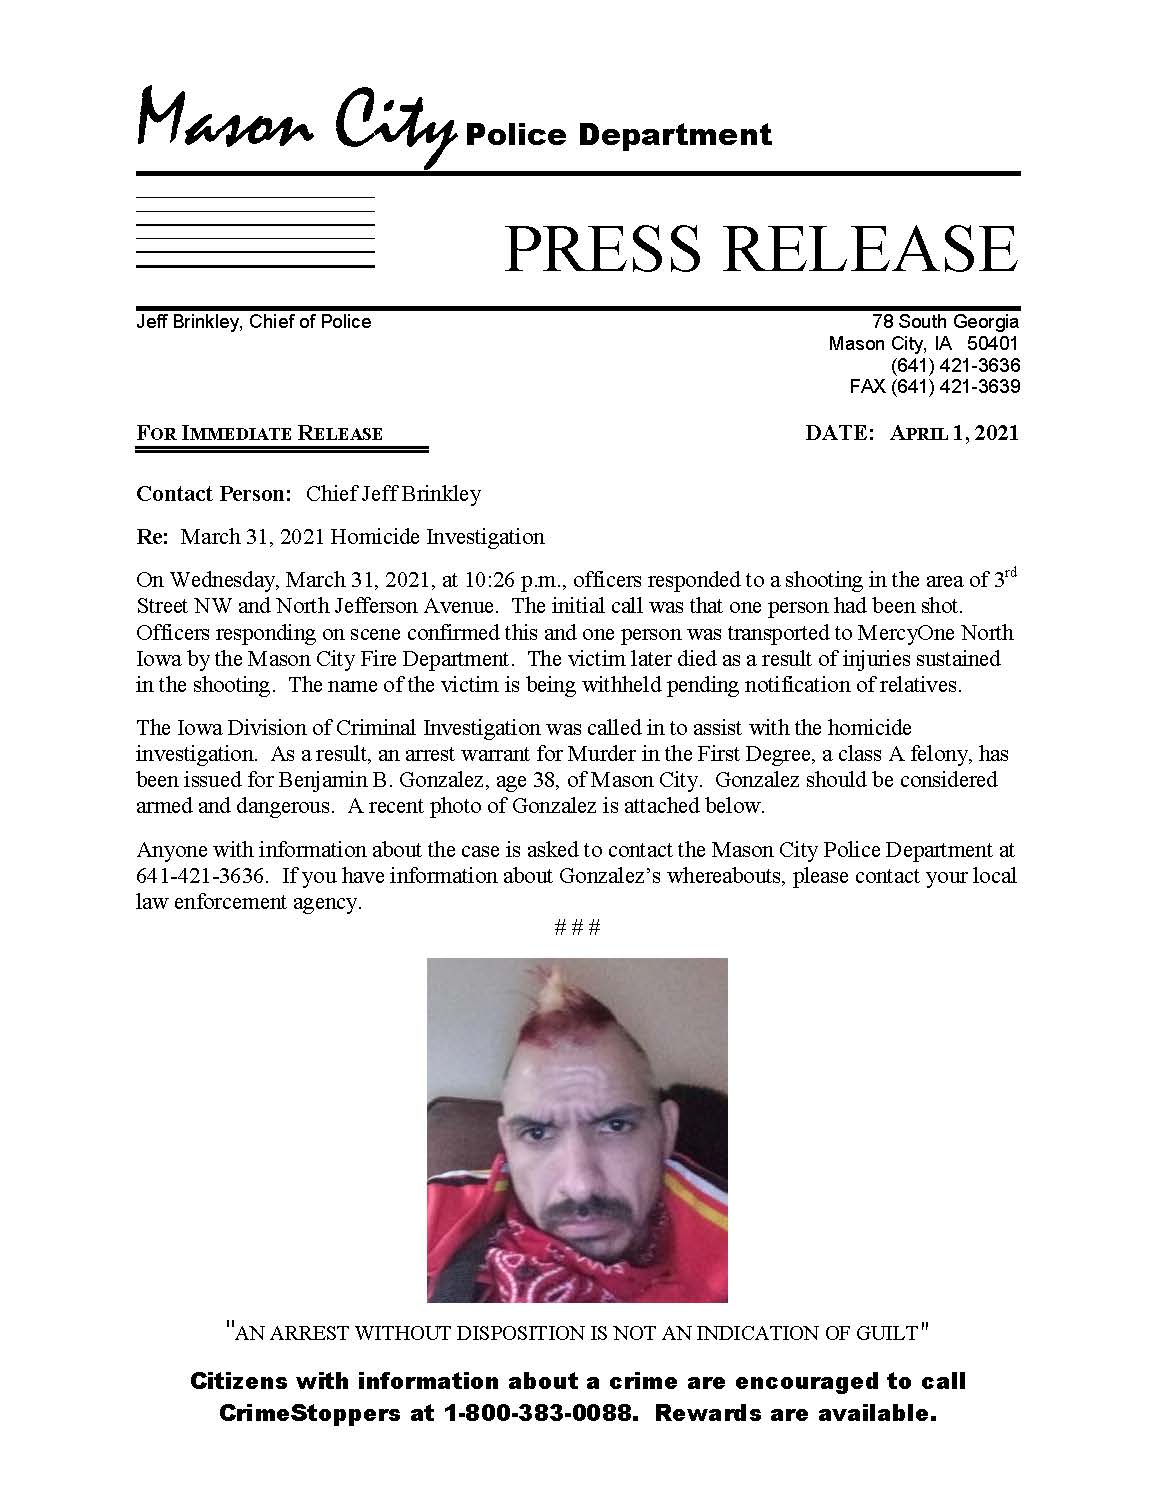 Link  to Mason City homicide investigation press release.